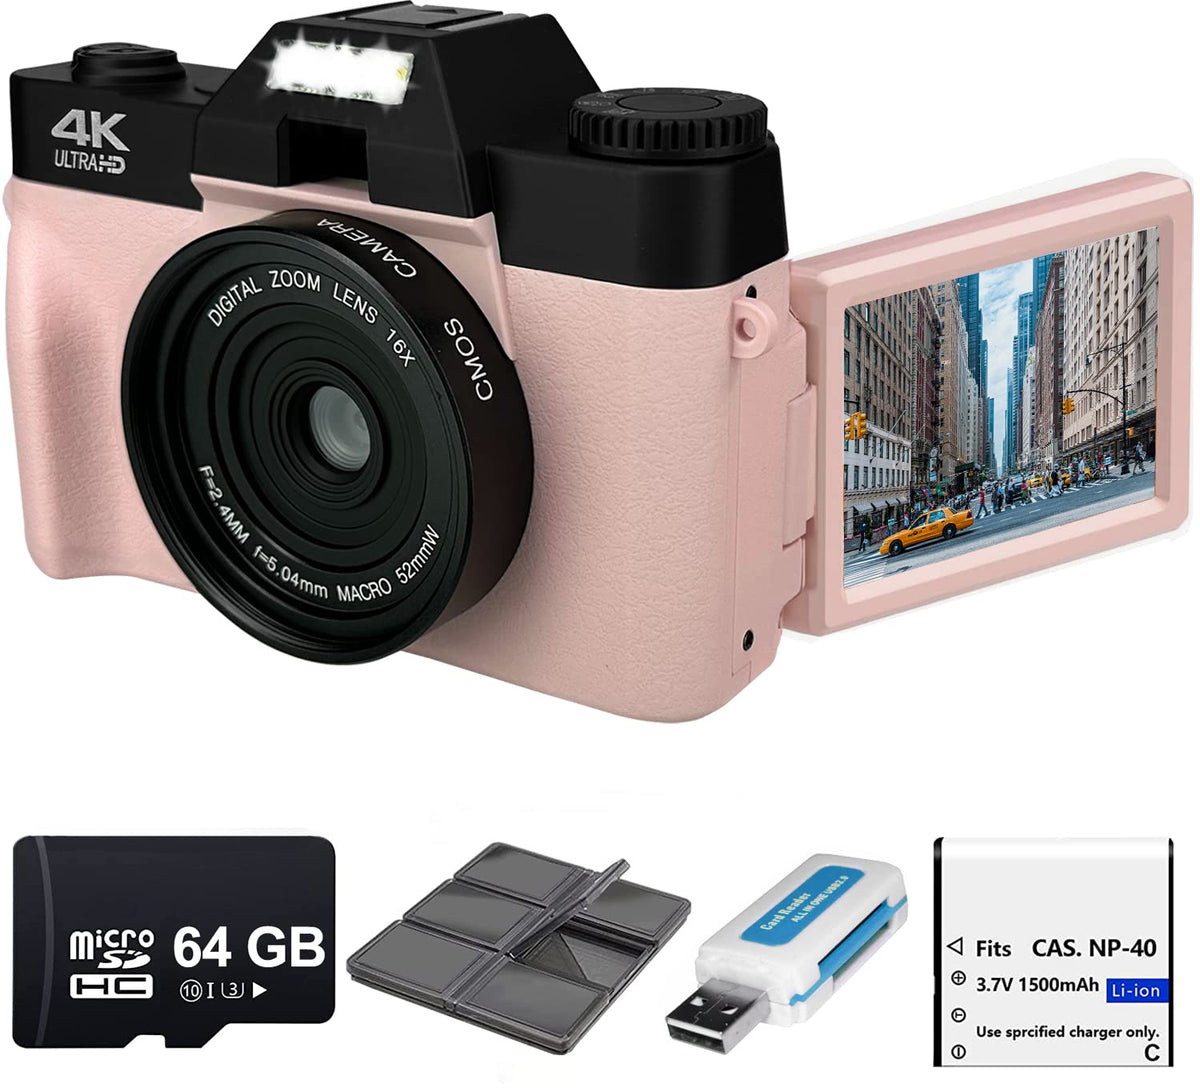 eDealz 4K 48MP Digital Camera Photography with 3ÃƒÂ¢Ã¢â€šÂ¬Ã¢â€žÂ¢ÃƒÂ¢Ã¢â€šÂ¬Ã¢â€žÂ¢ 180Ãƒâ€šÃ‚Â° Flip Screen, WiFi, 16X Zoom, Rechargeable Battery, 64GB Micro SD Card, 6 PC Card Holder USB Card Reader (Pink)